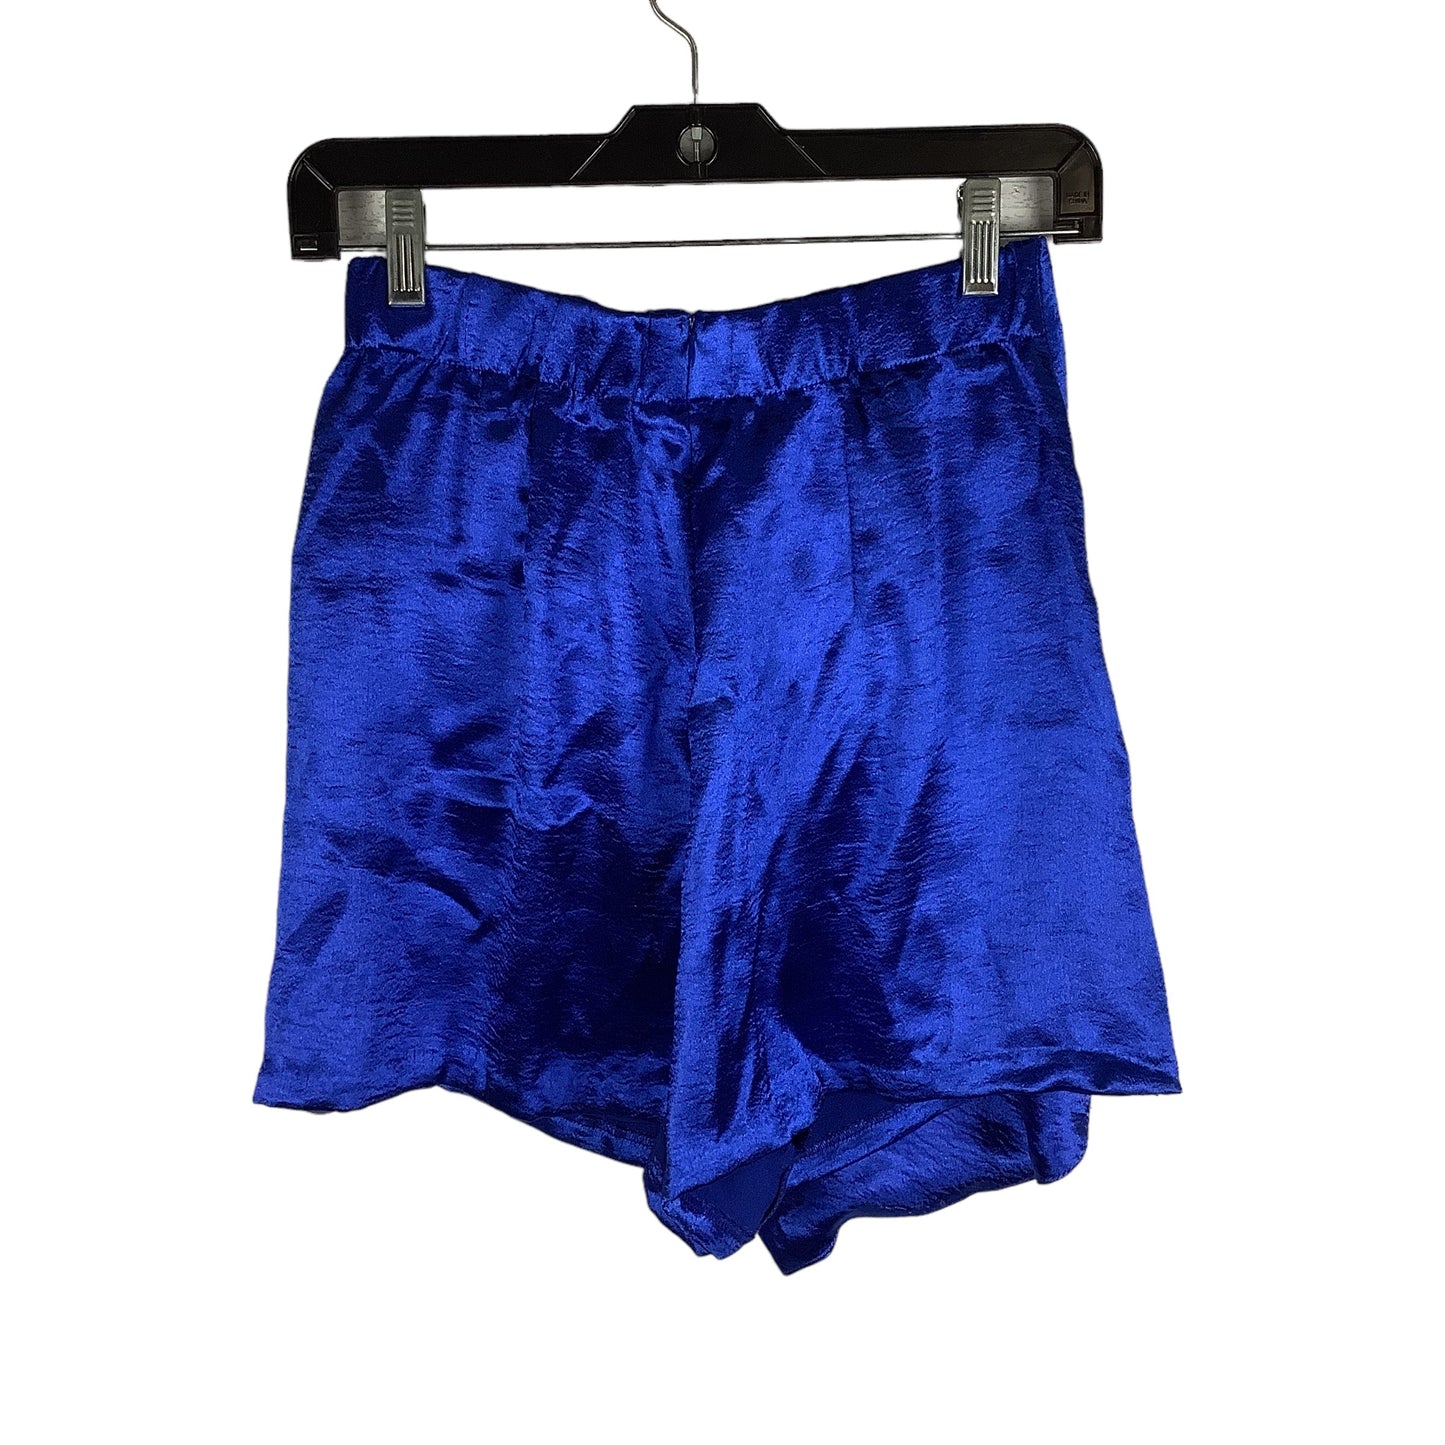 Blue Shorts Clothes Mentor, Size M